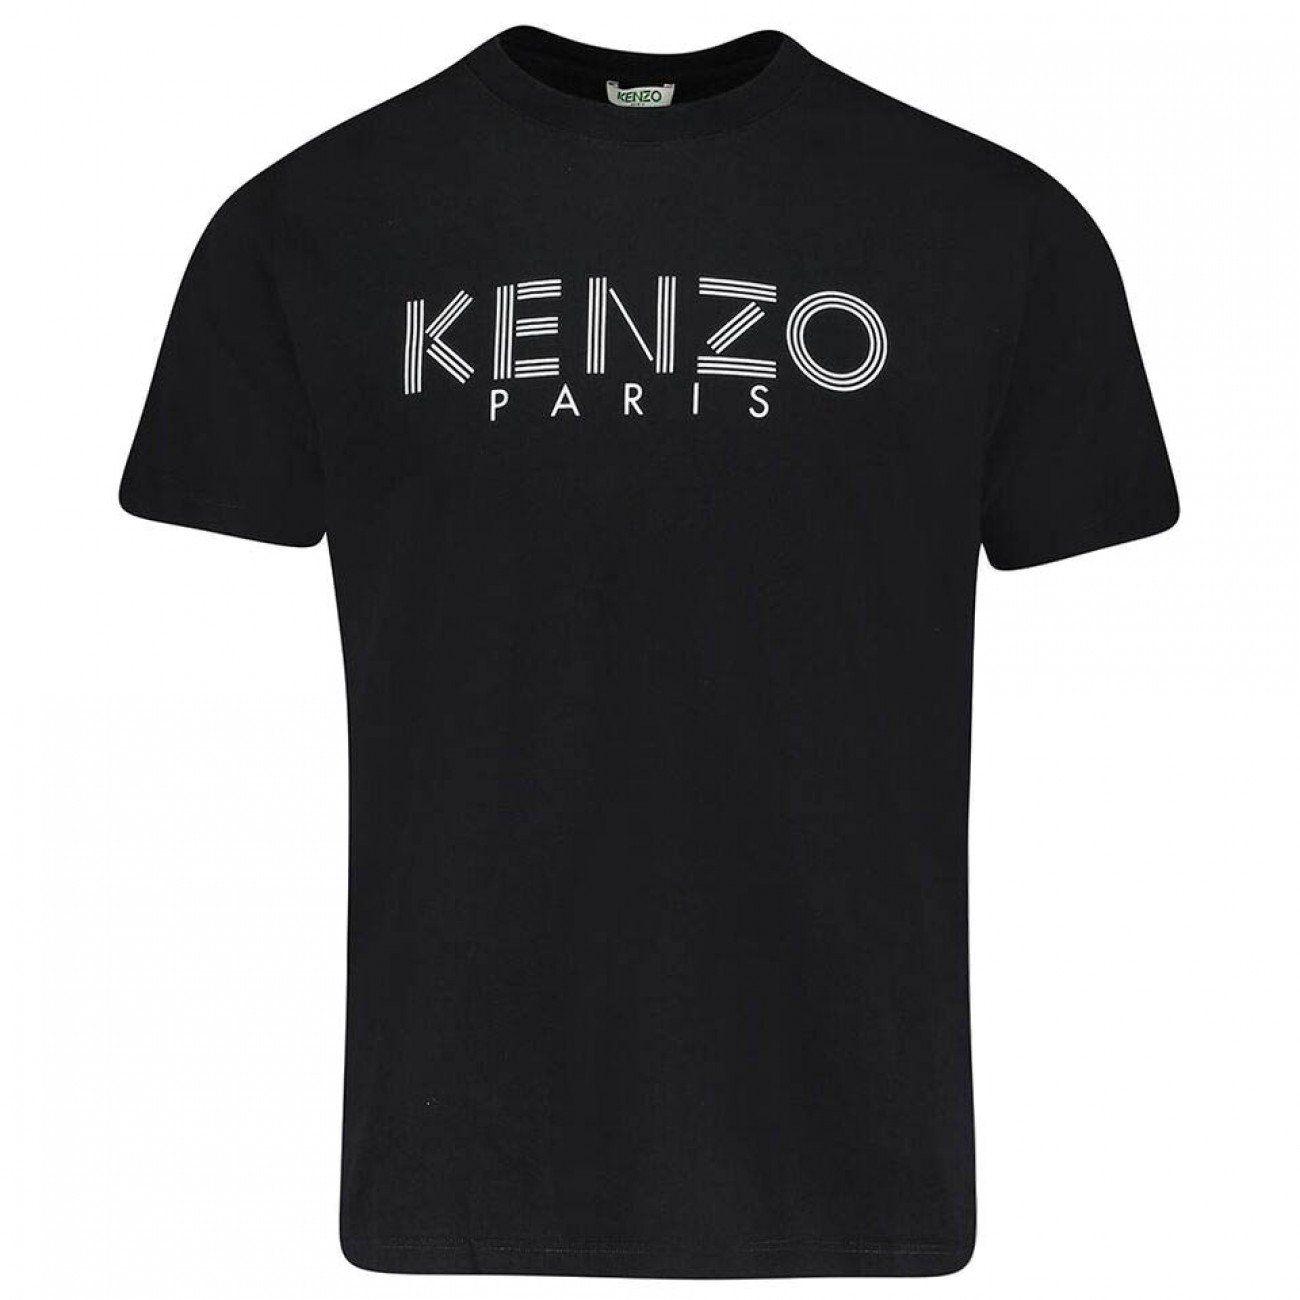 Kenzo Paris Logo - Kenzo Paris Logo Print T-Shirt 